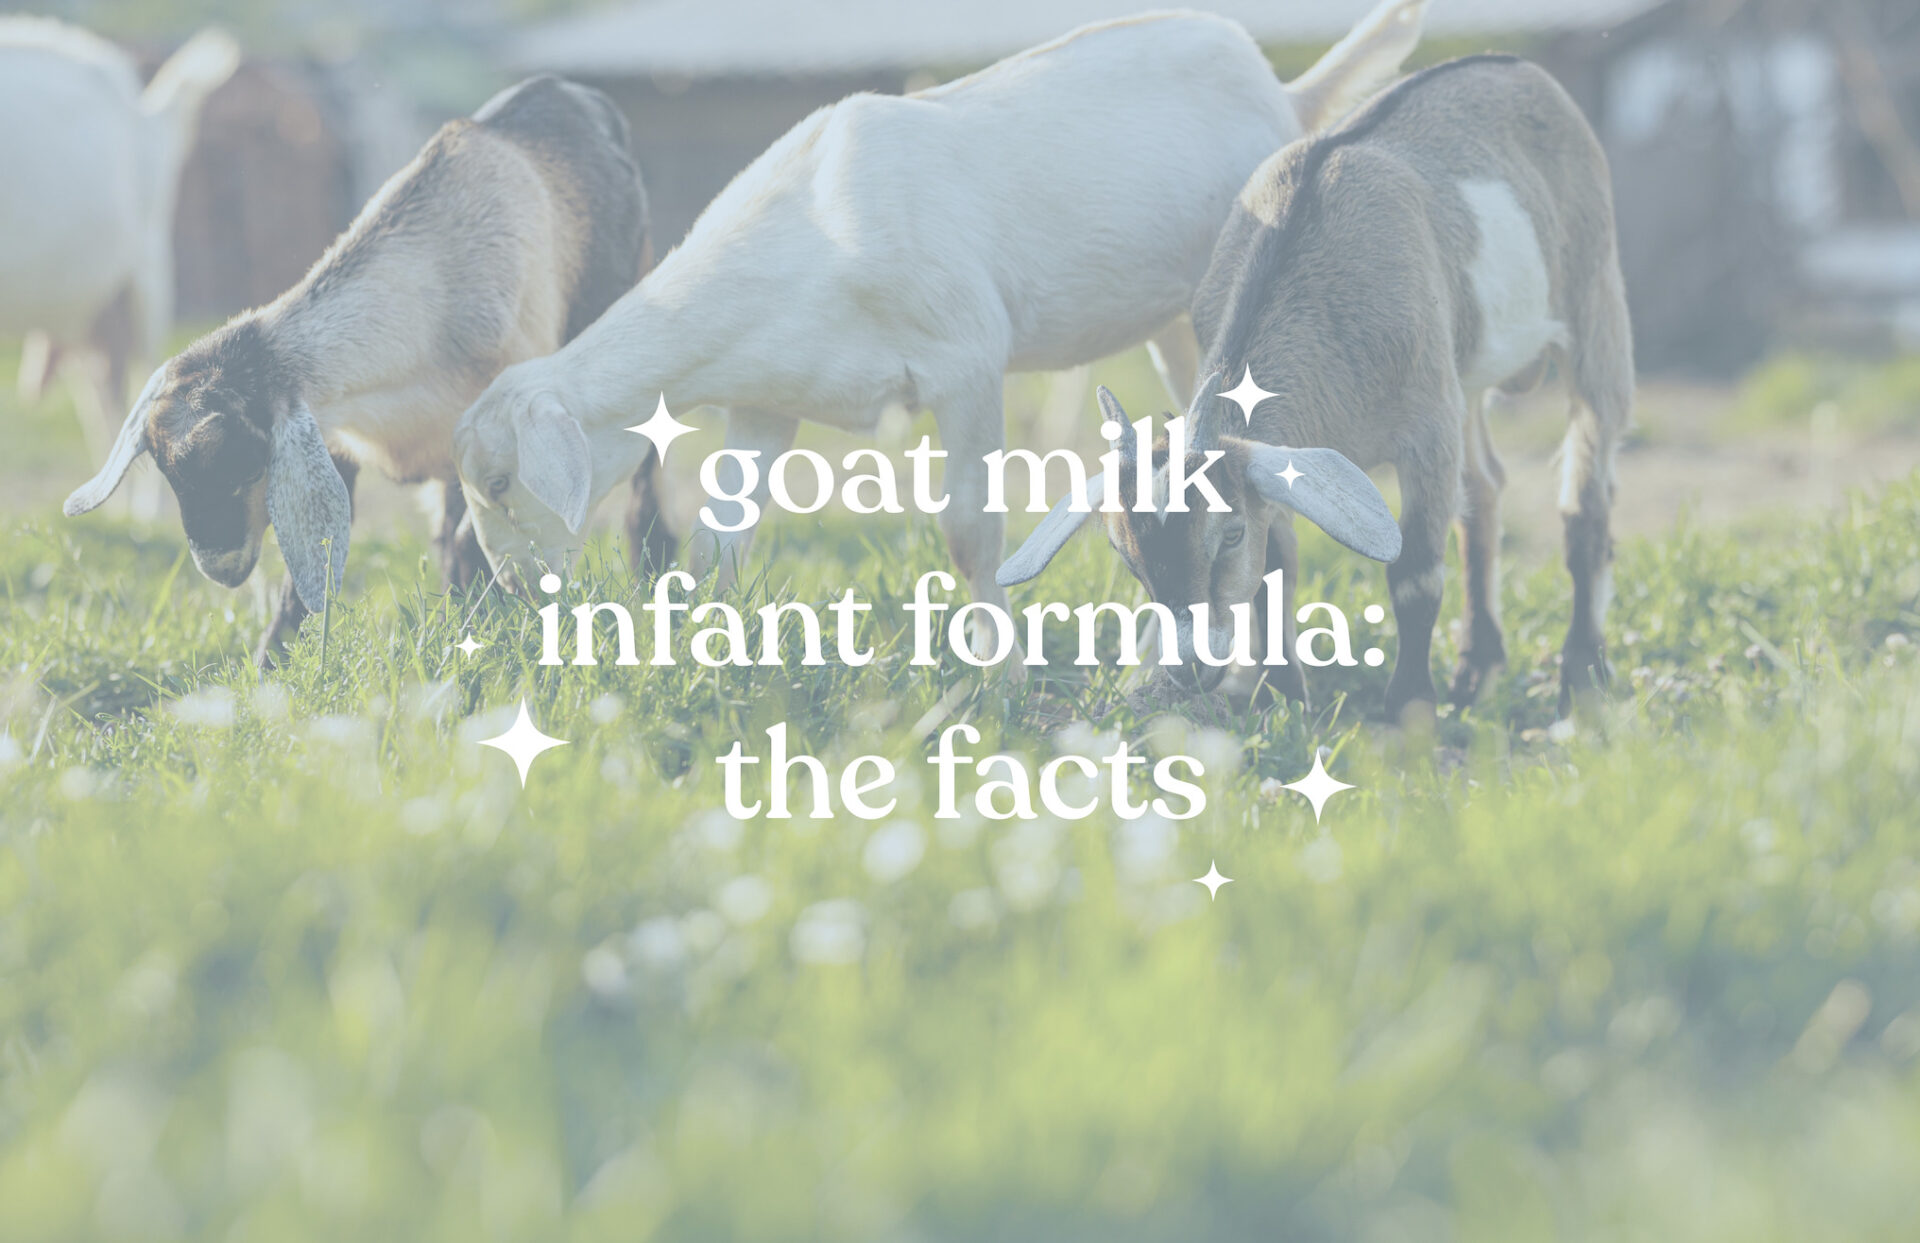 Digestive benefits of goat milk infant formula